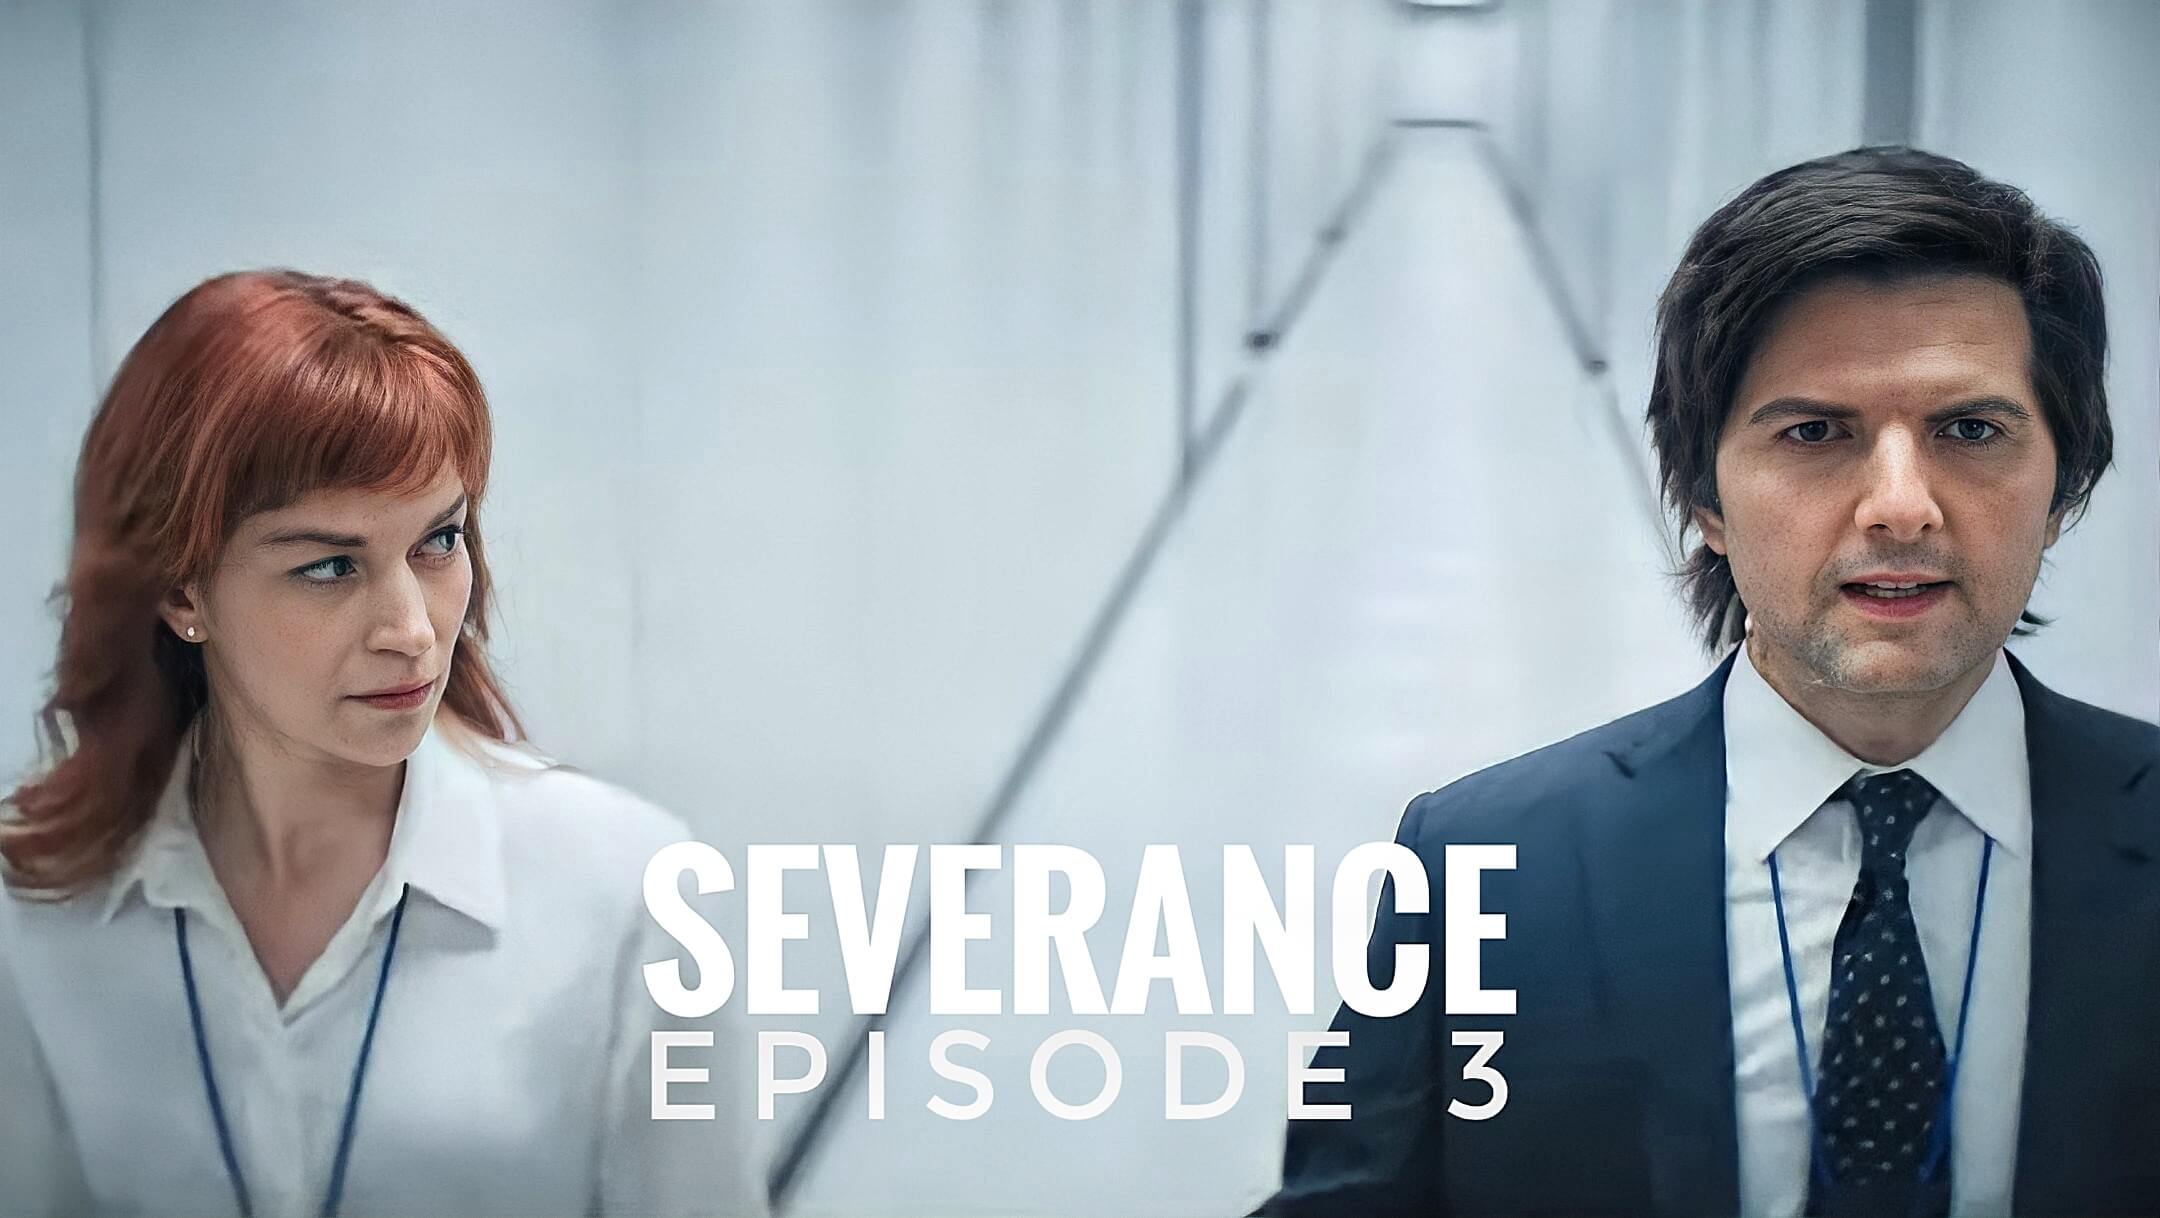 Severance episode 3 release date